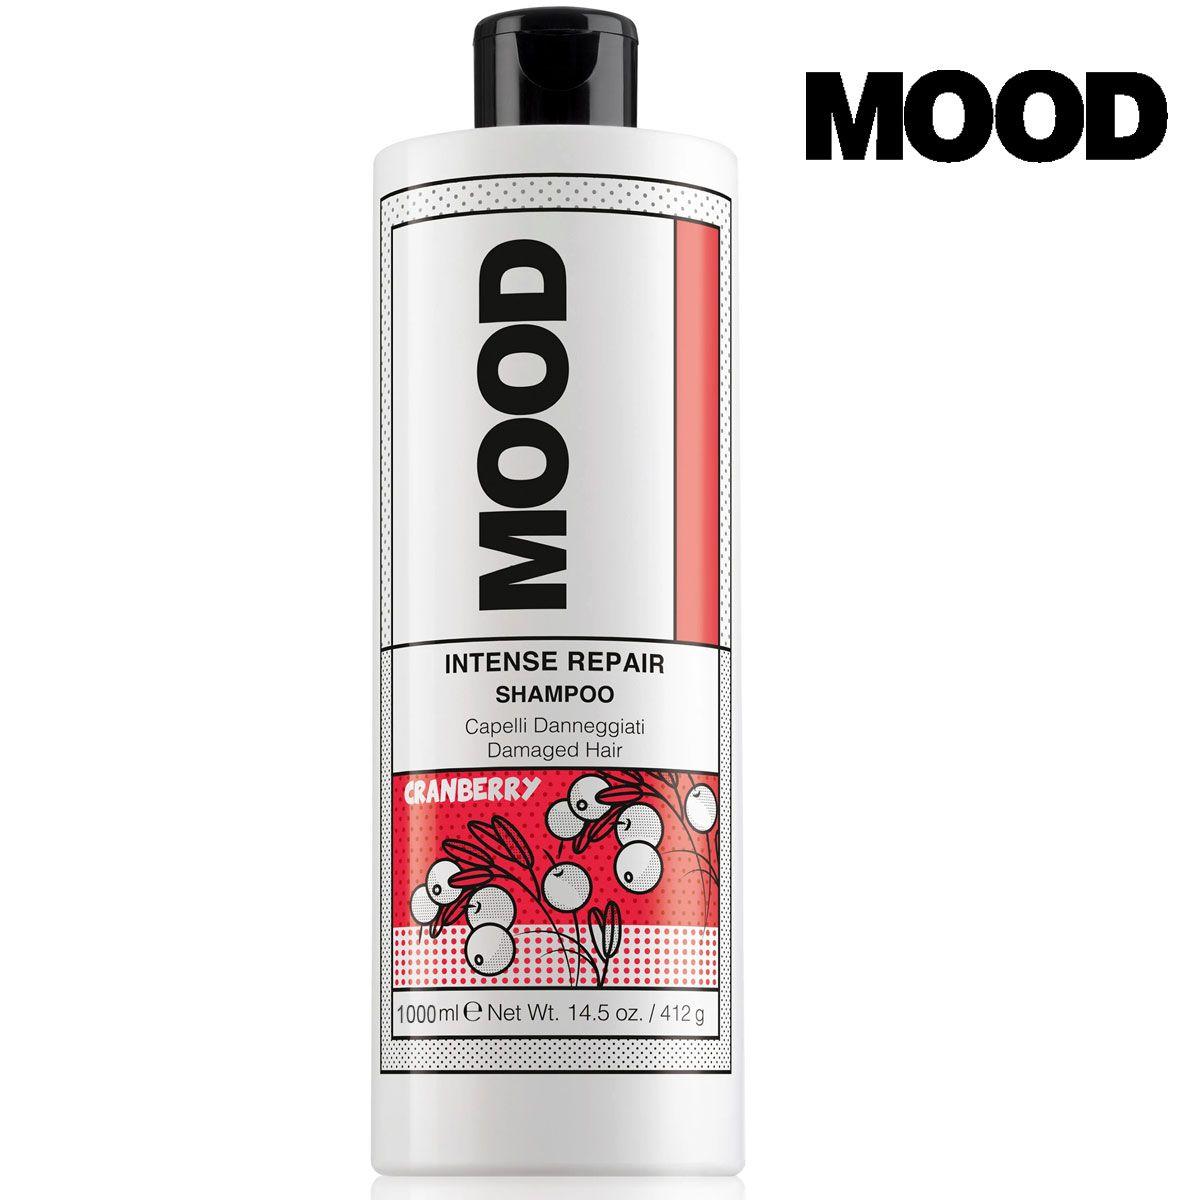 Mood intense repair shampoo 1000ml